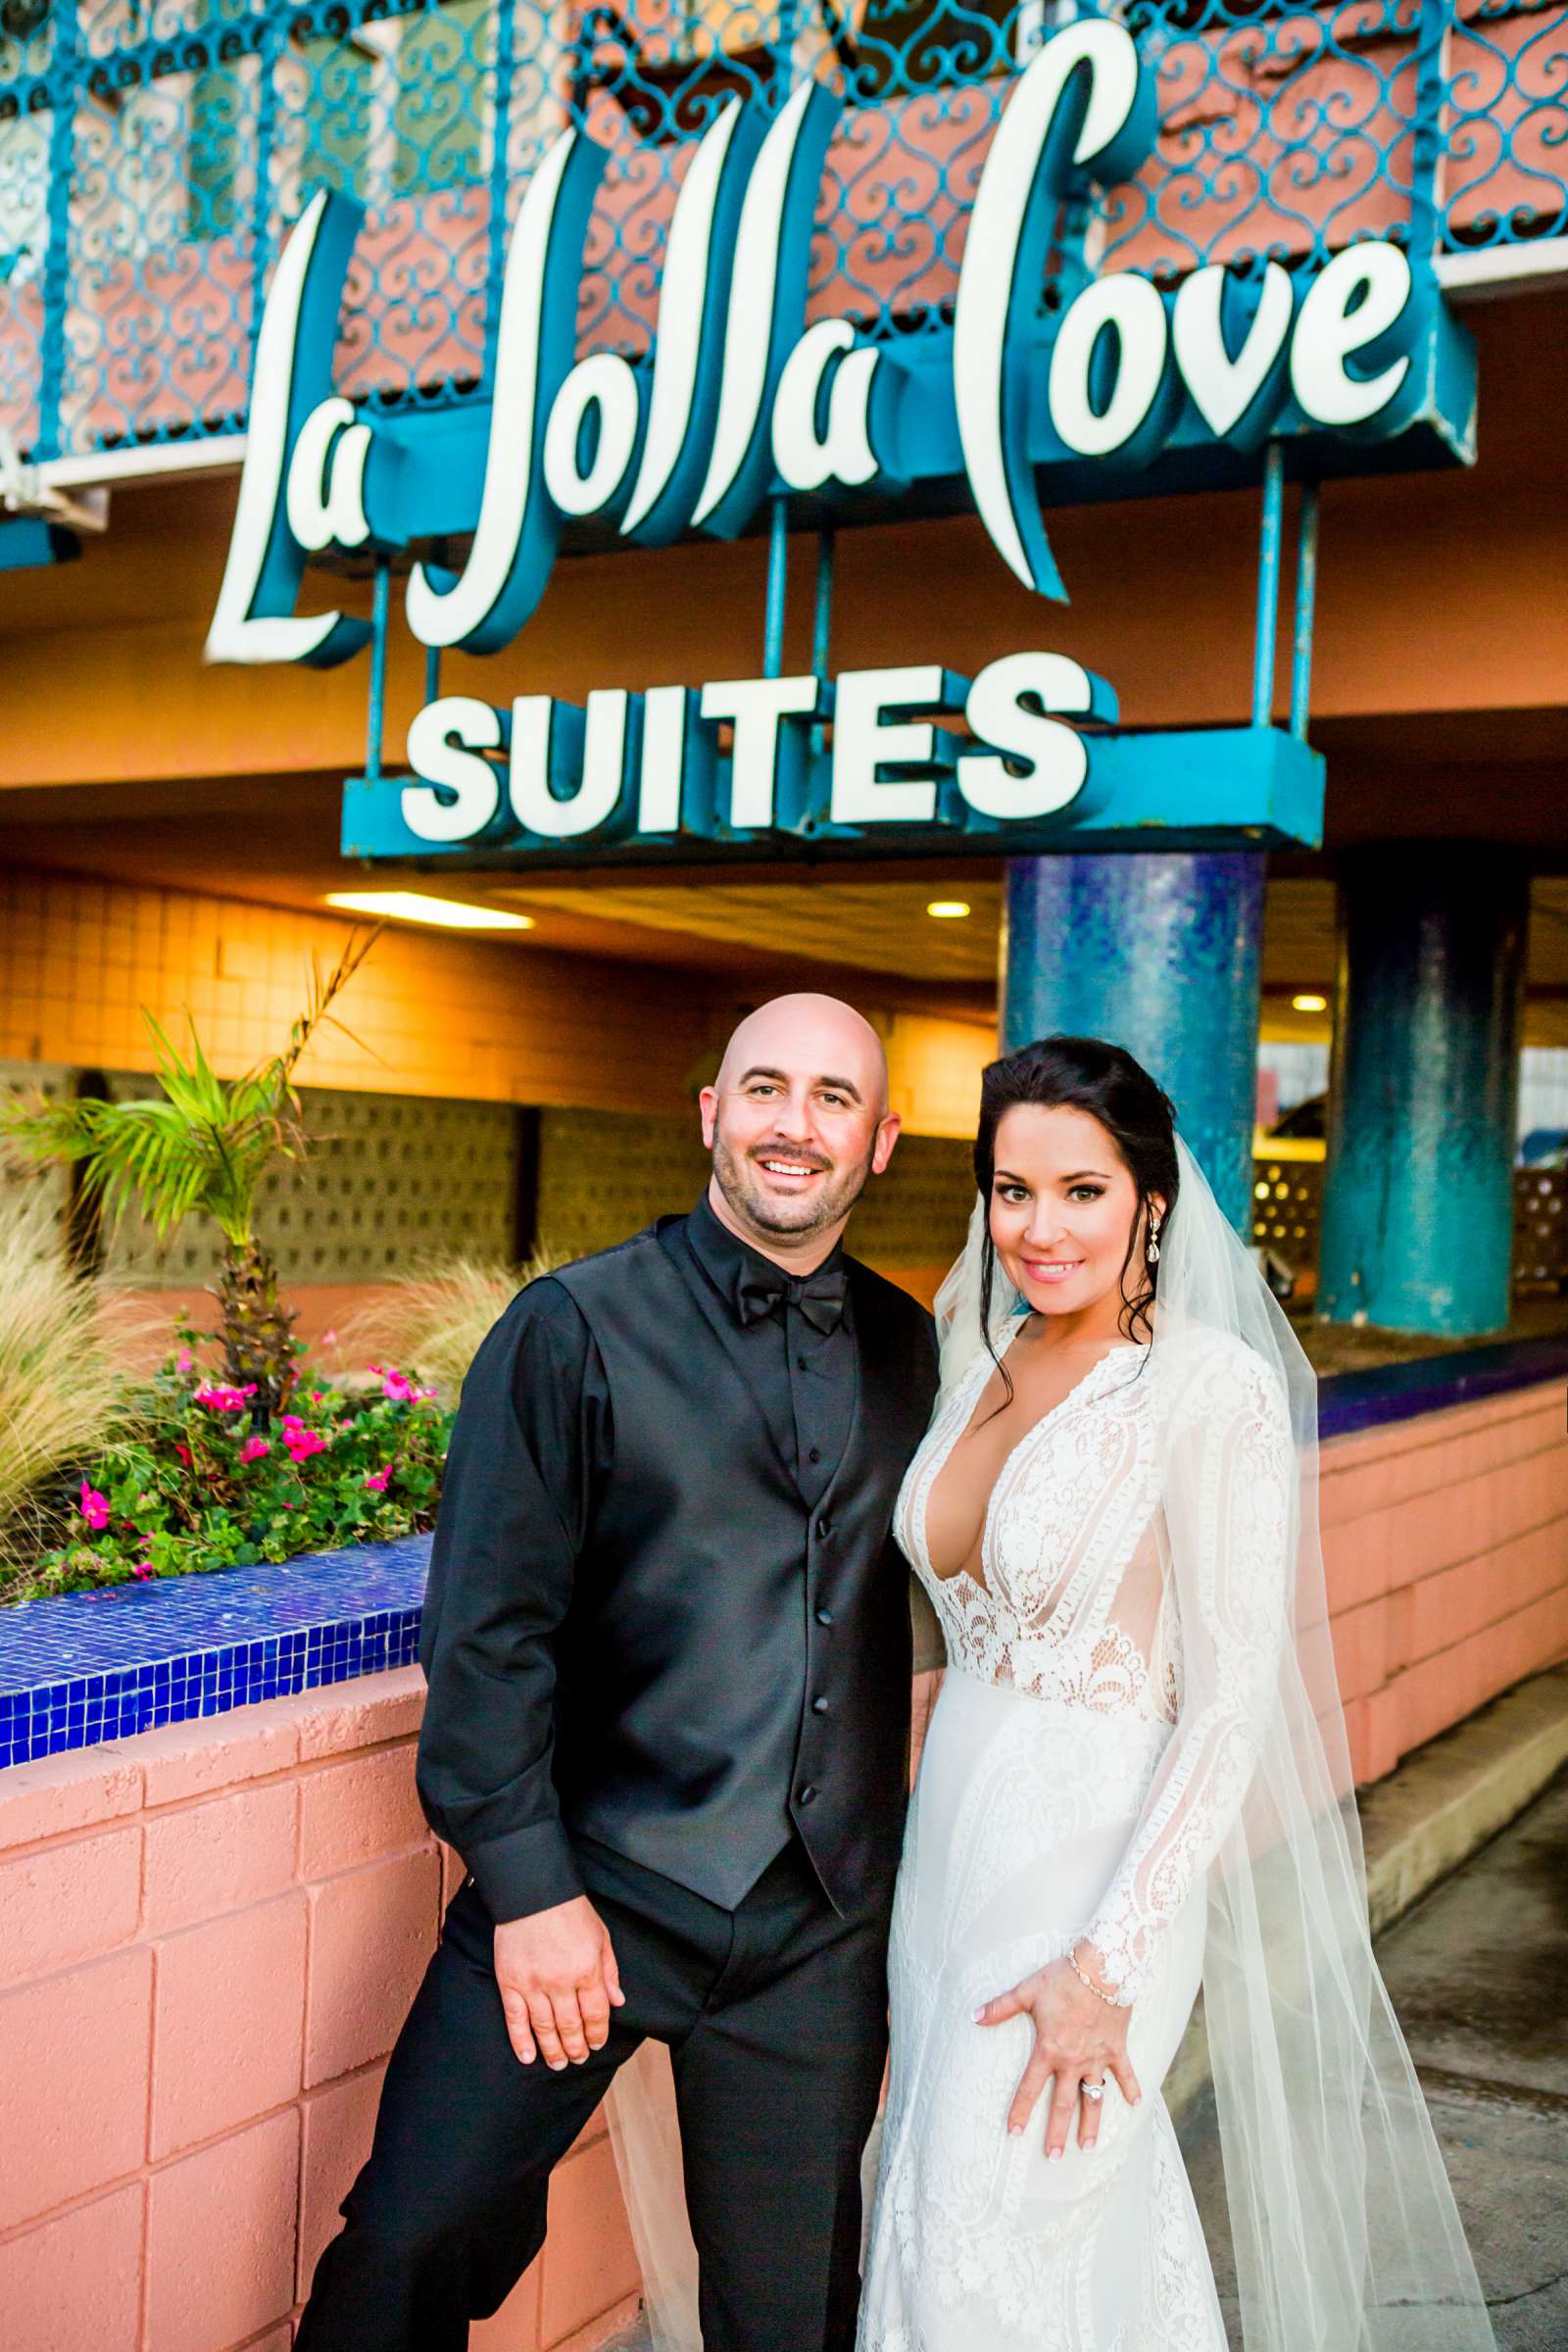 La Jolla Cove Suites Wedding, Melanie and Bradley Wedding Photo #6 by True Photography